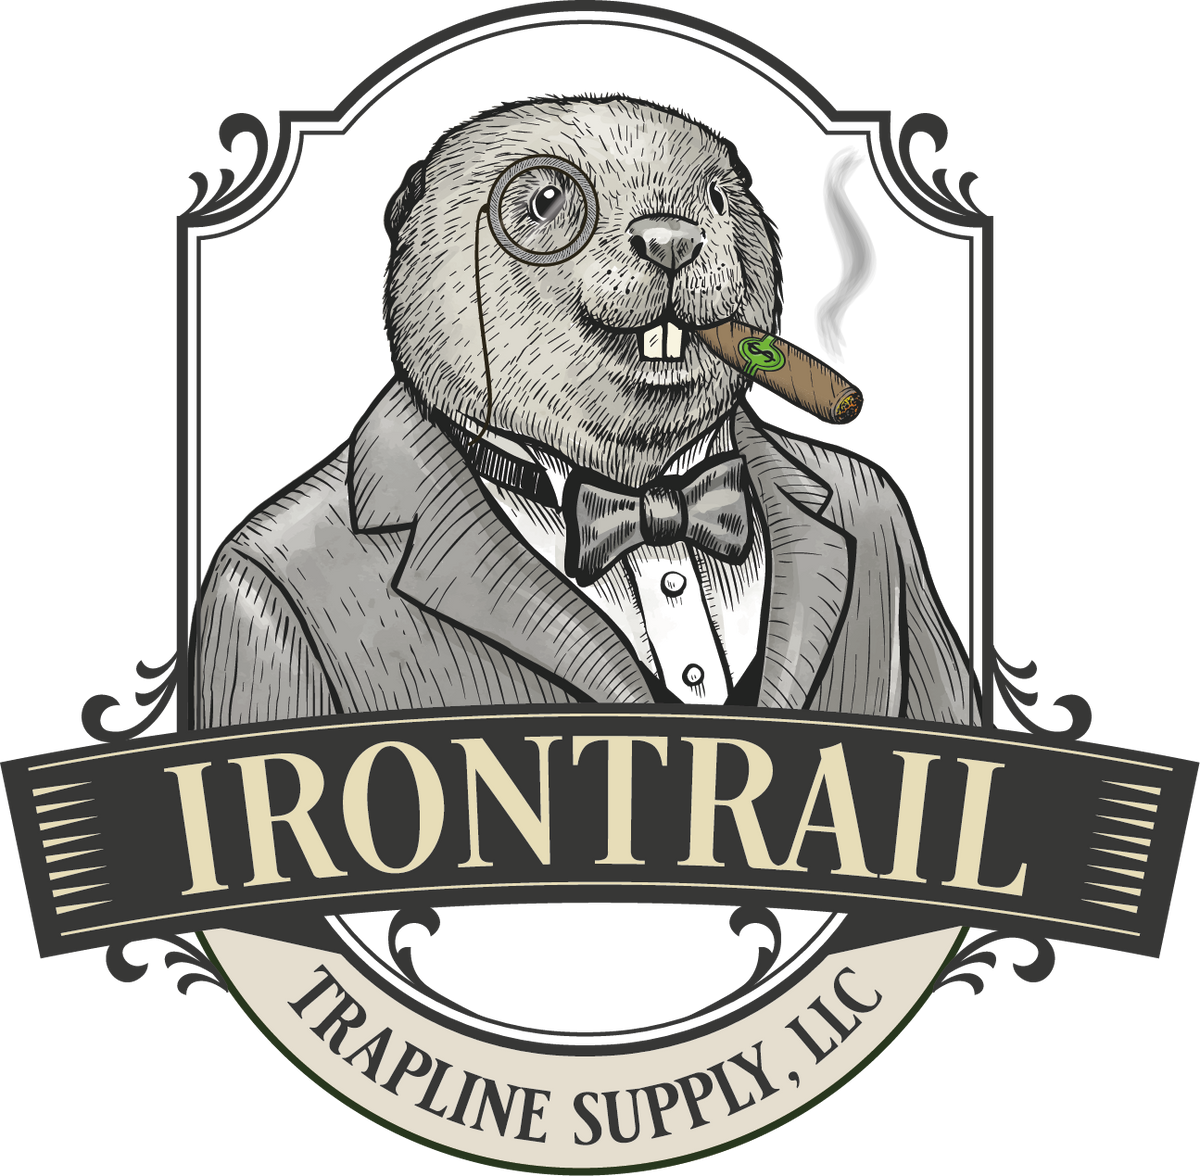 Dog Proof Raccoon Traps – IronTrail Trapline Supply, LLC